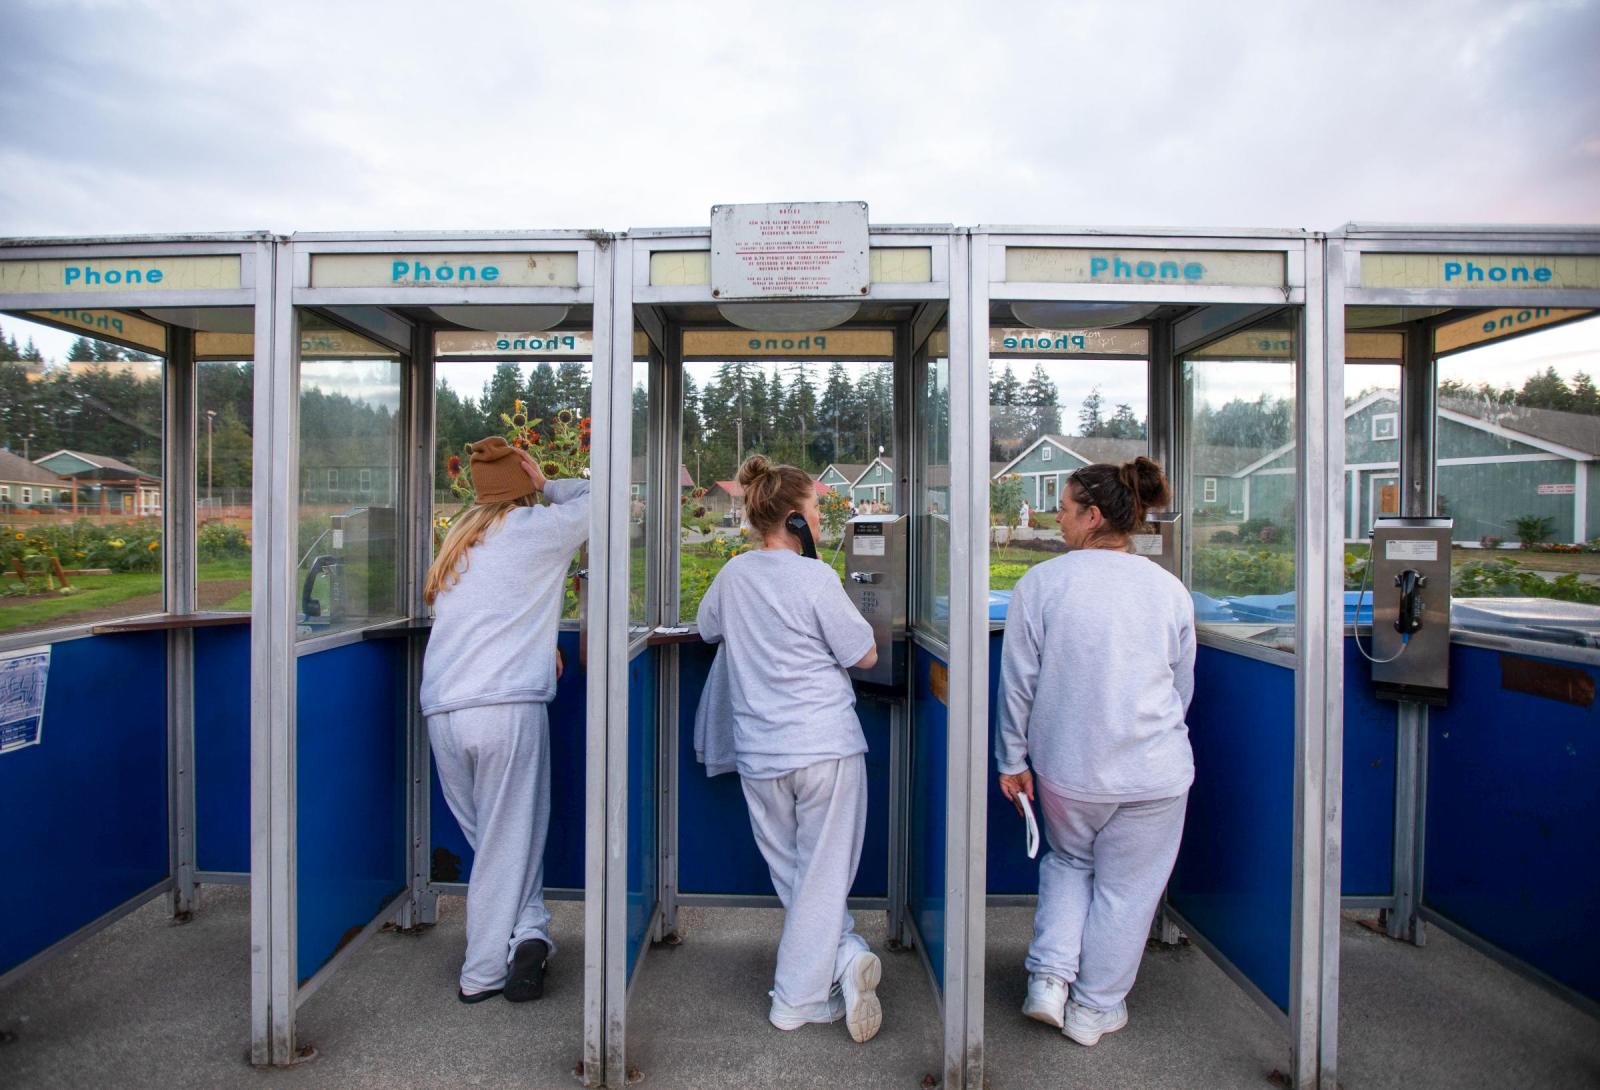 Inmates using the pay phone boo...nter in Gig Harbor, Washington.